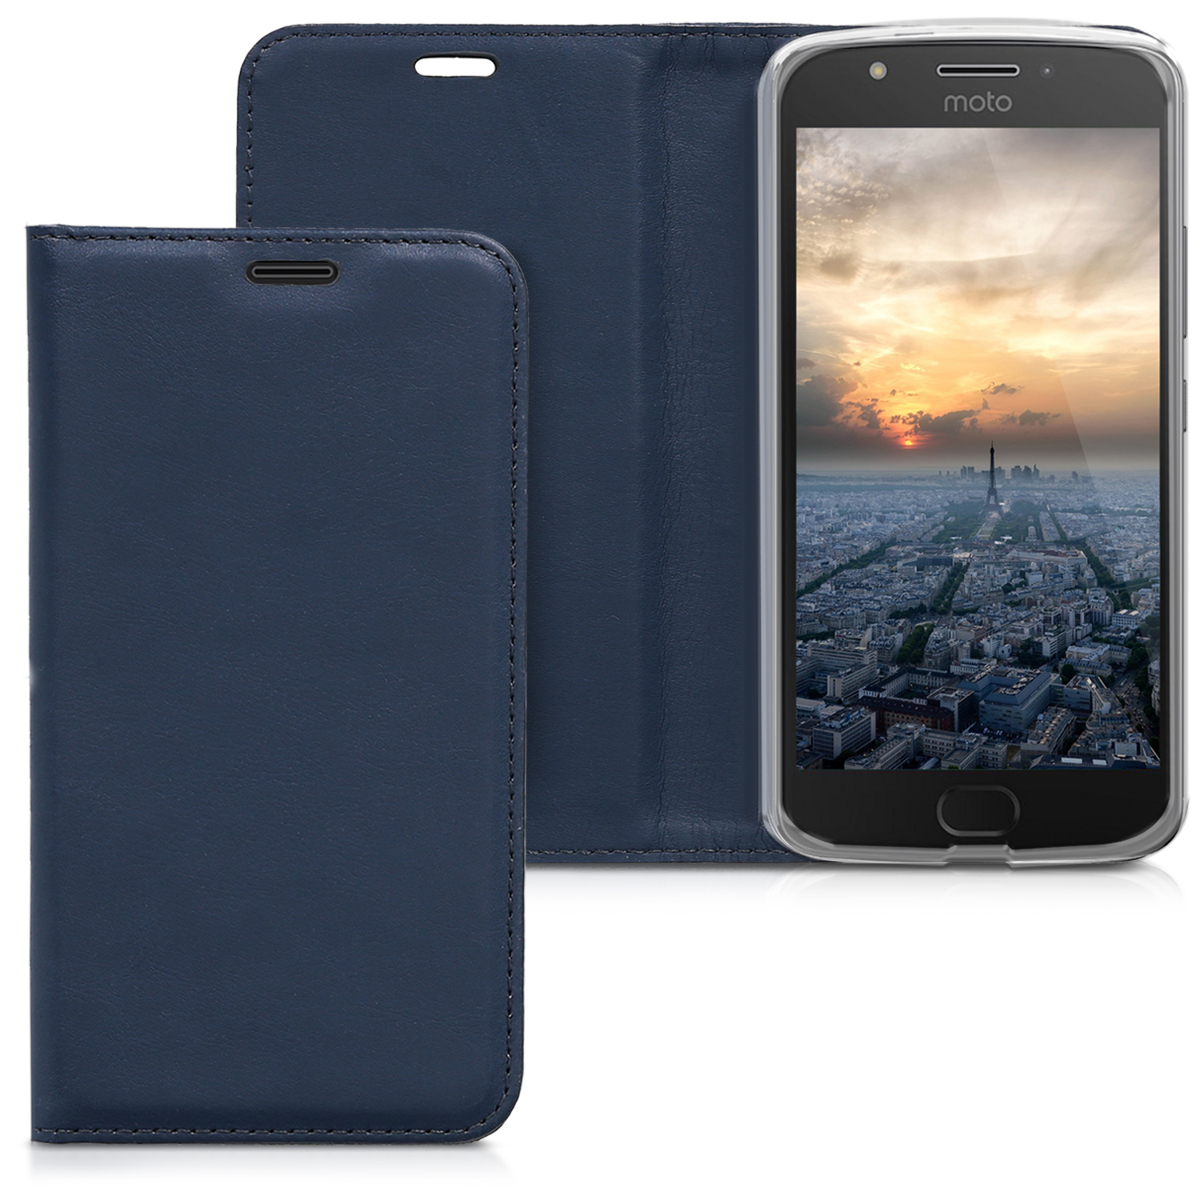 Modré pouzdro | obal pro Motorola Moto E4 - Tmavě modrá